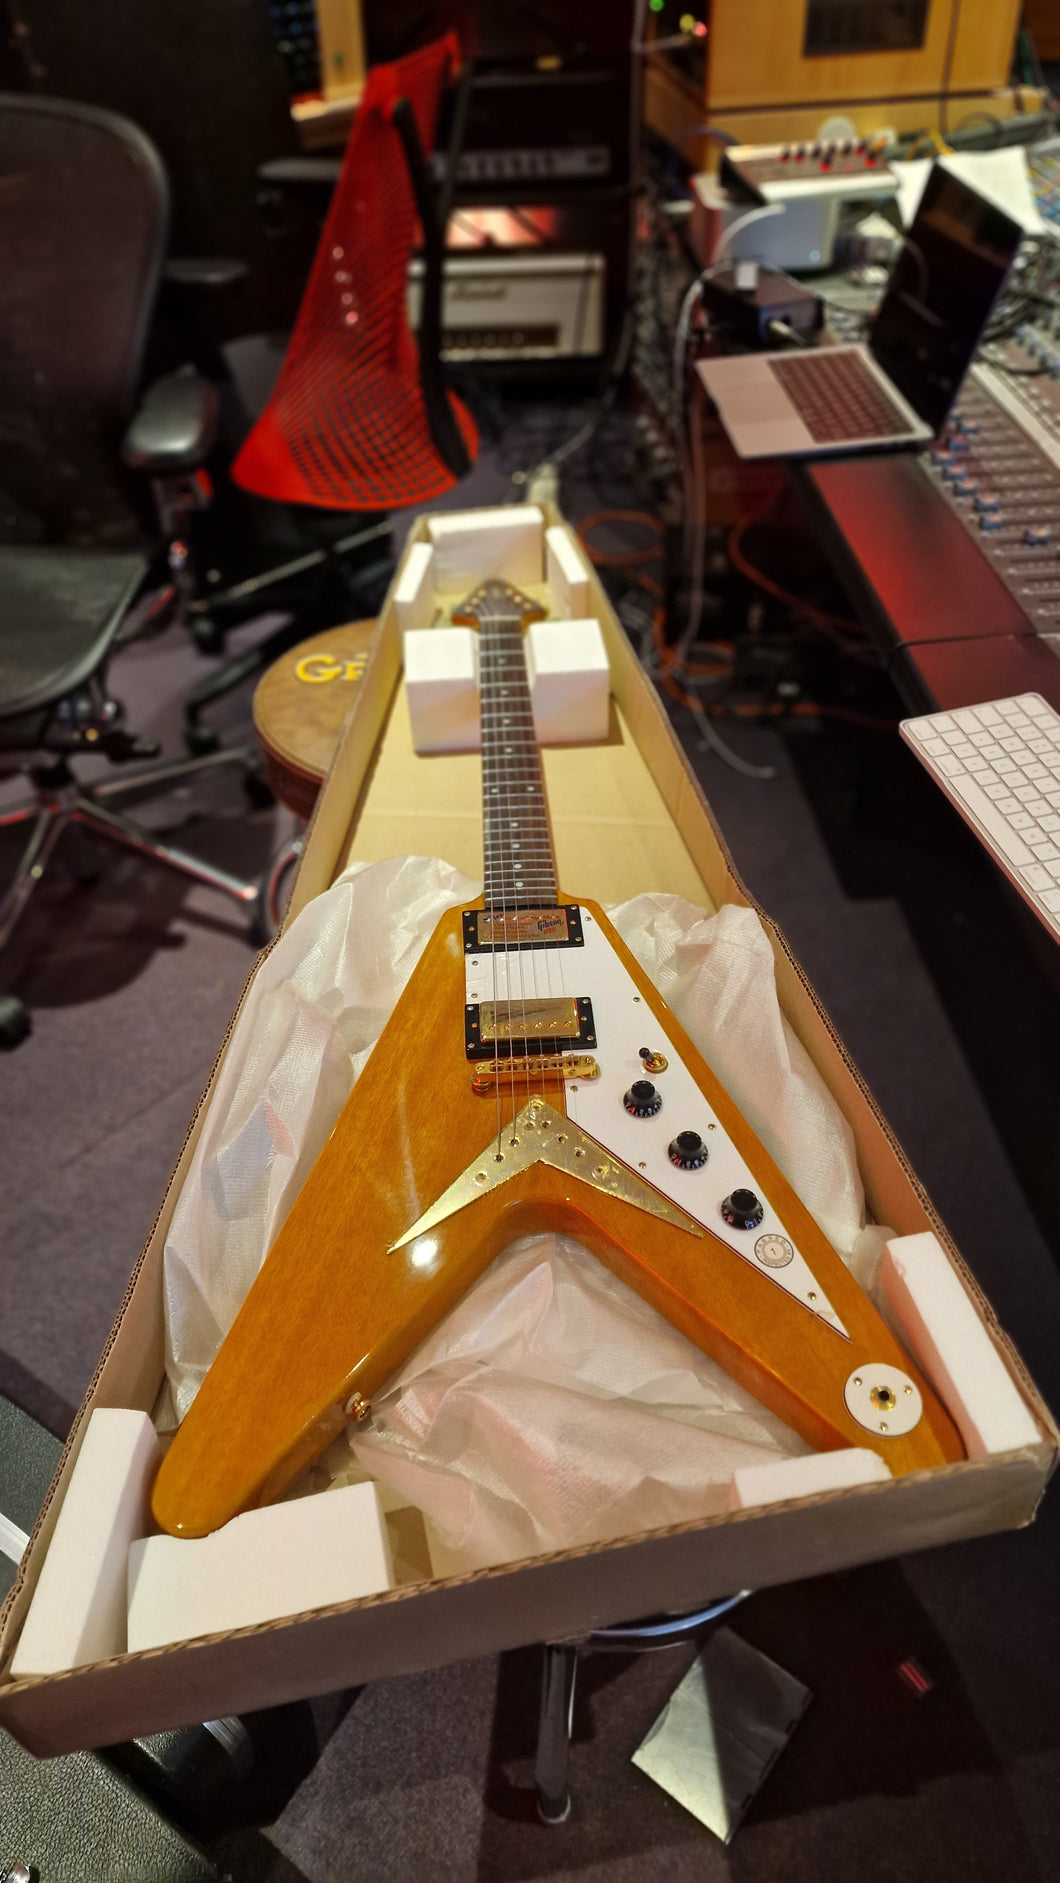 2002 Gibson Epiphone 1958 Flying V Korina BRAND NEW IN BOX '58 Made in Korea Gibson USA Pickups!